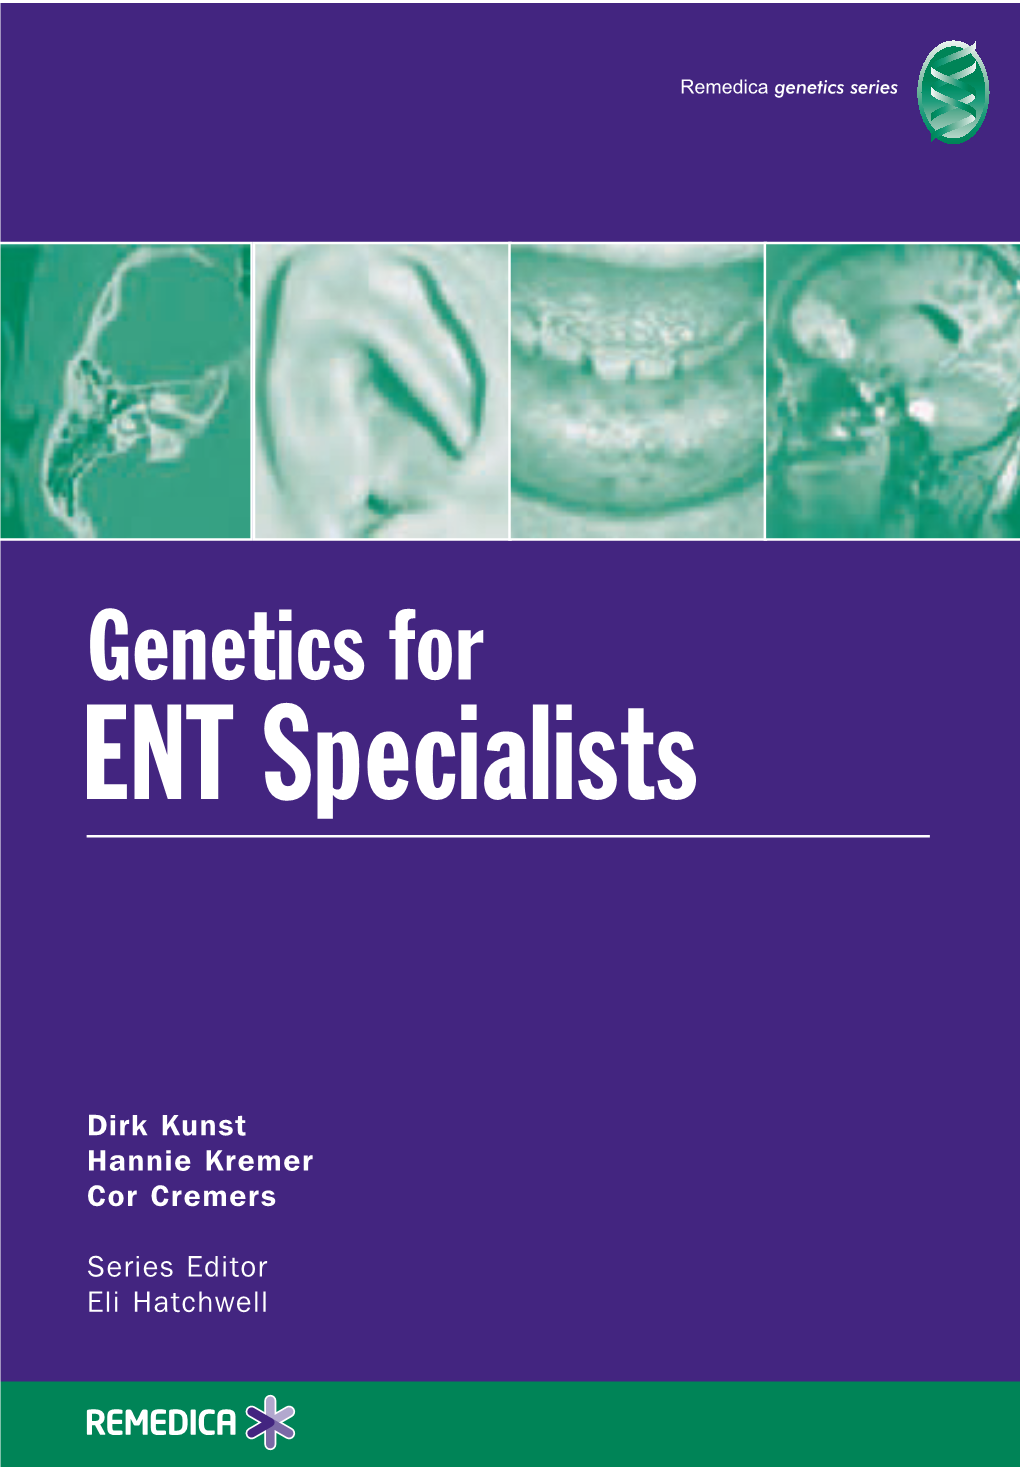 ENT Specialists Remedica Genetics Series